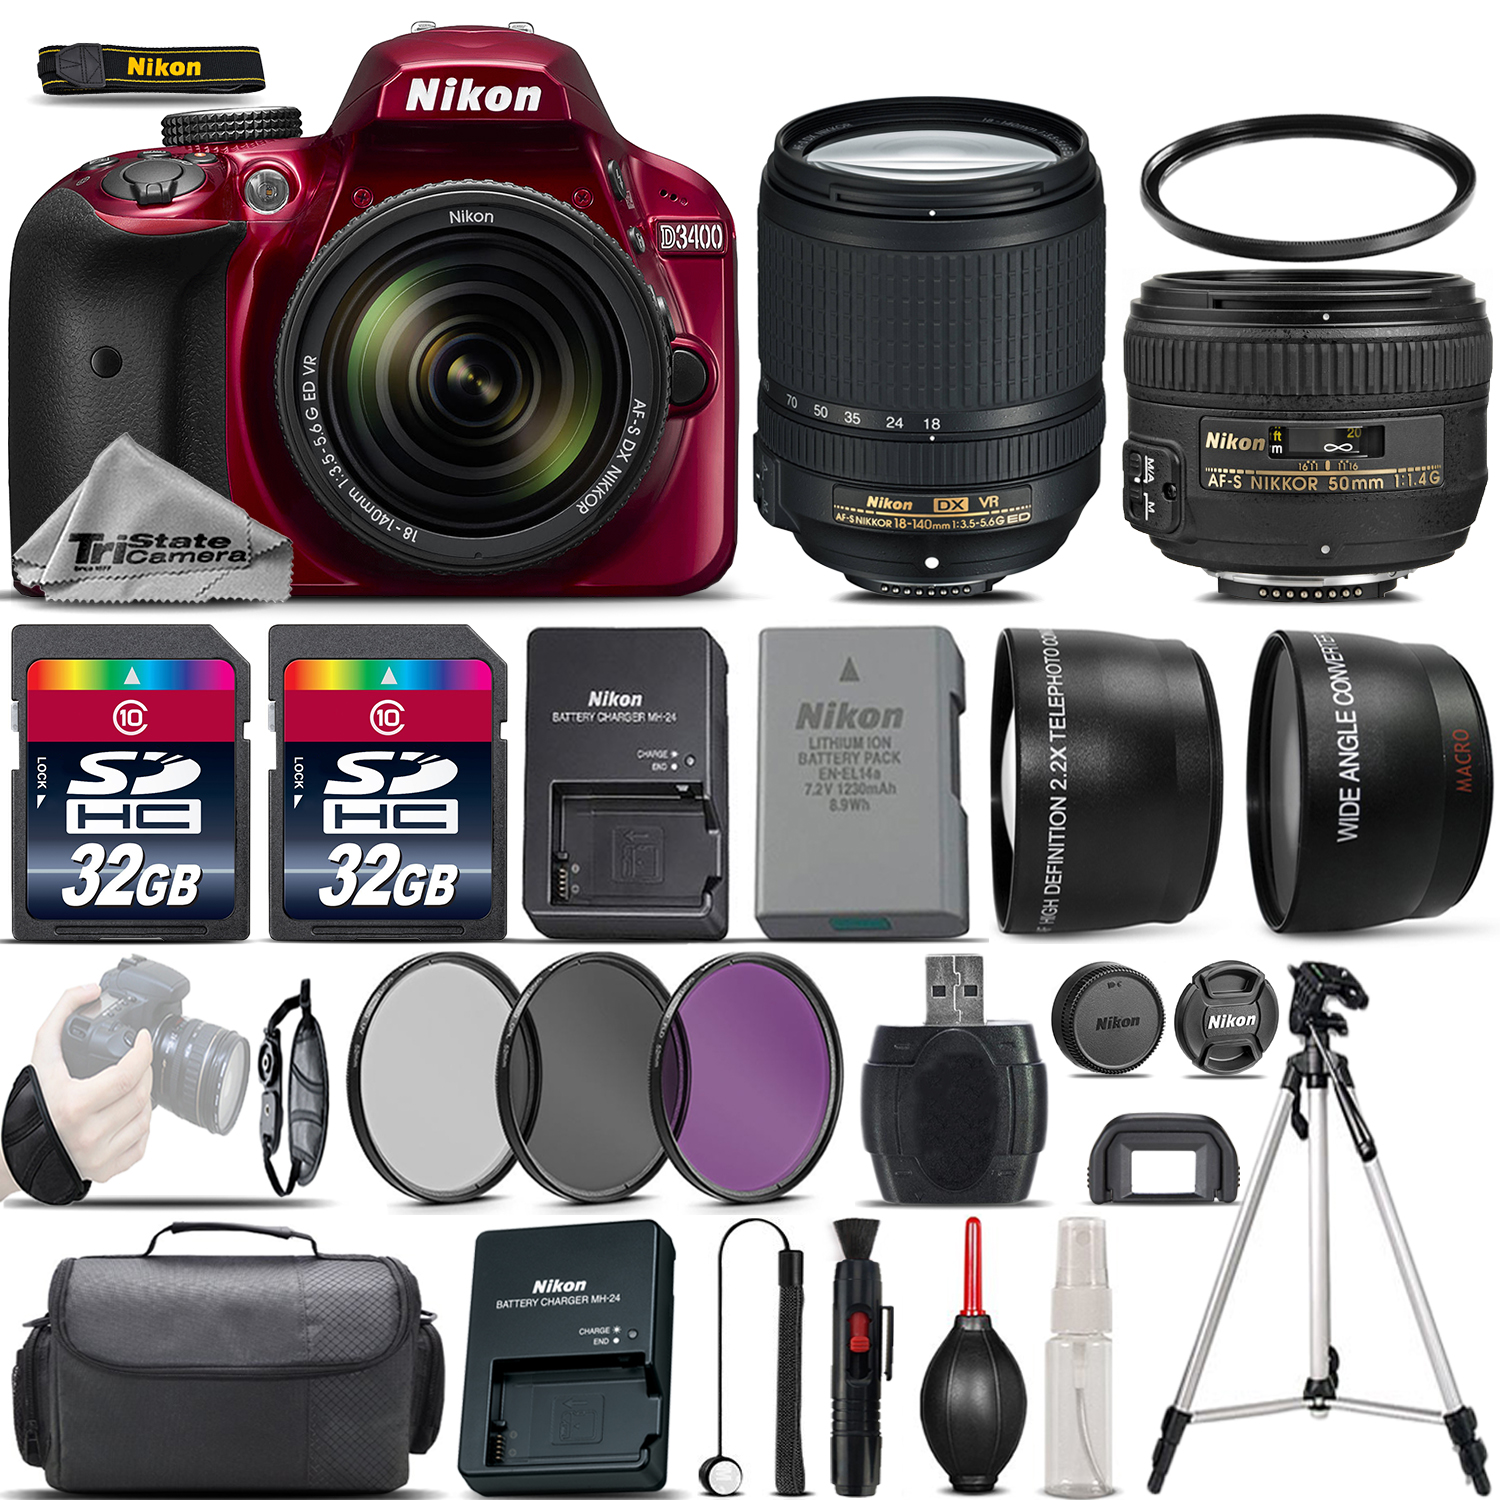 D3400 Digital RED Camera + 18-140mm VR + 50mm 1.4G Lens + 64GB -4 Lens Kit *FREE SHIPPING*